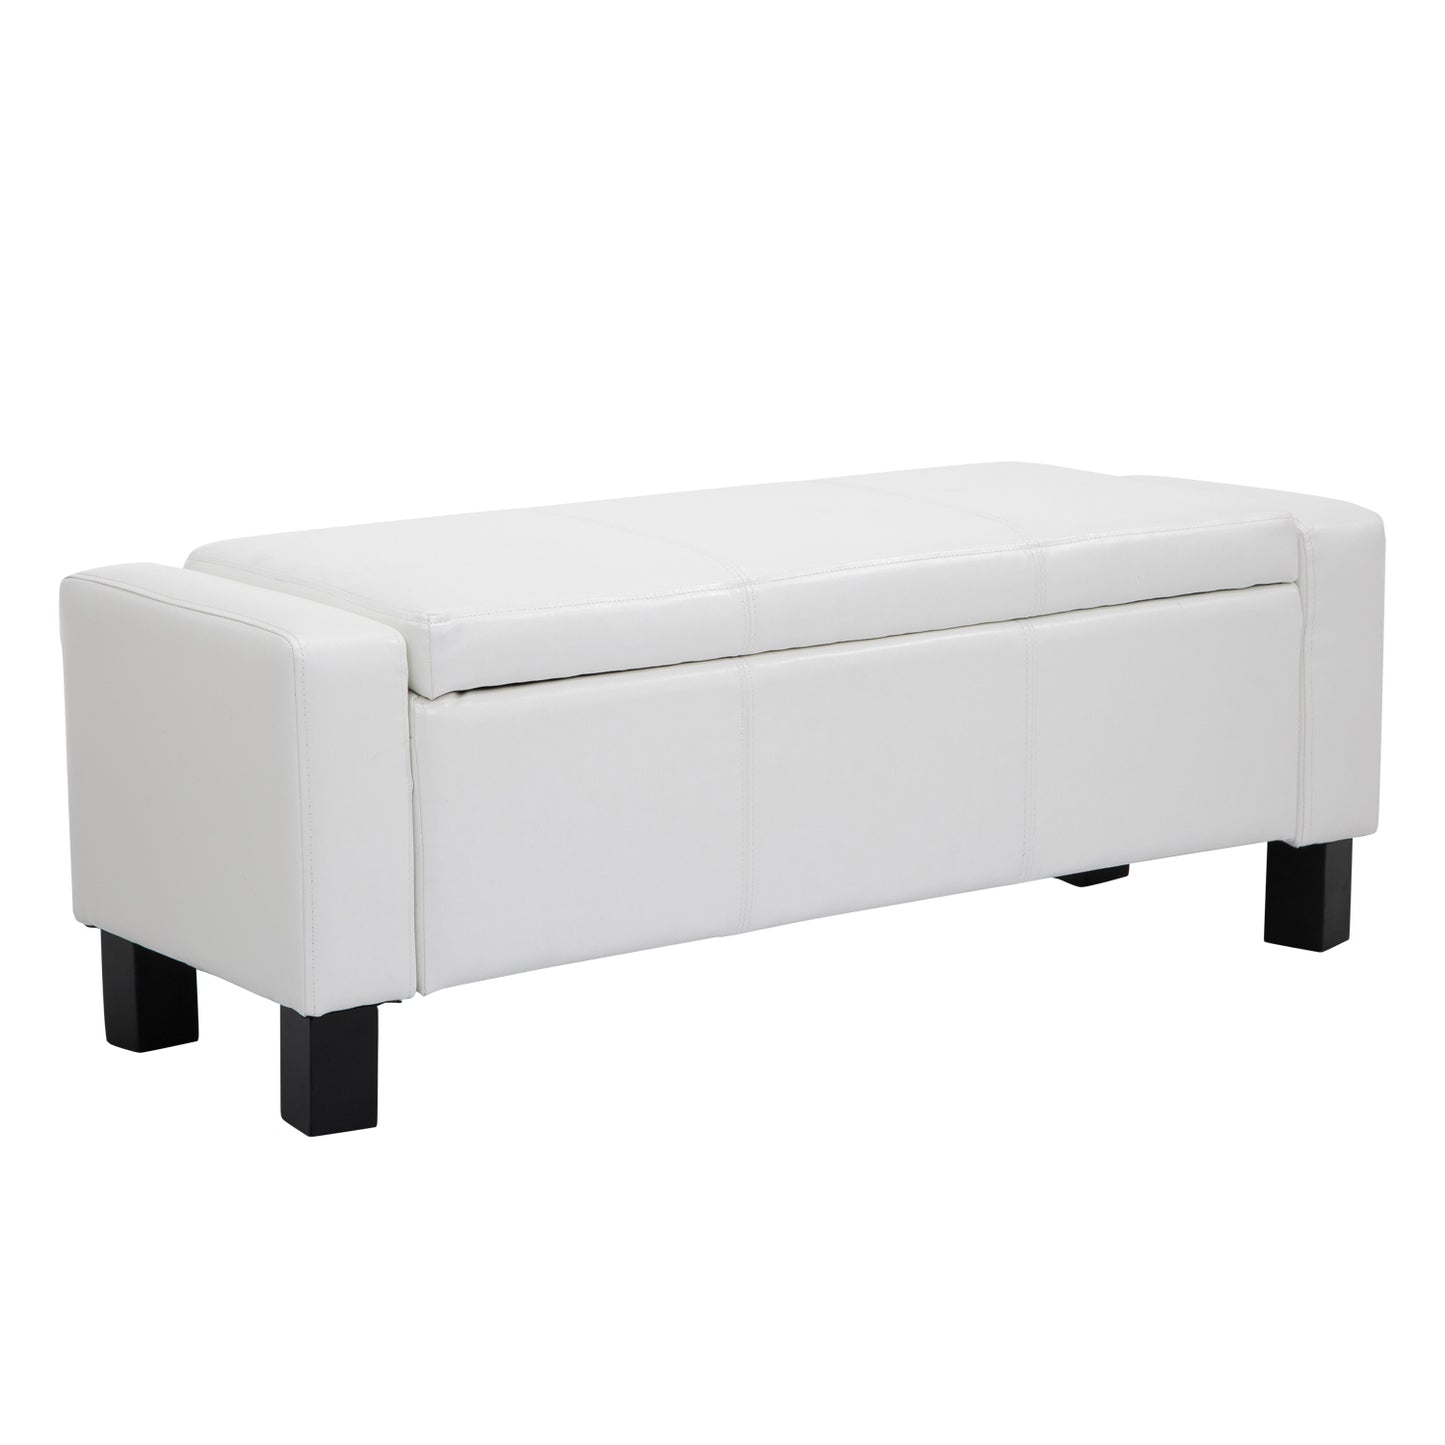 HOMCOM Storage Ottoman Bench PU Leather Footstool Ottoman Upholstered MDF-White